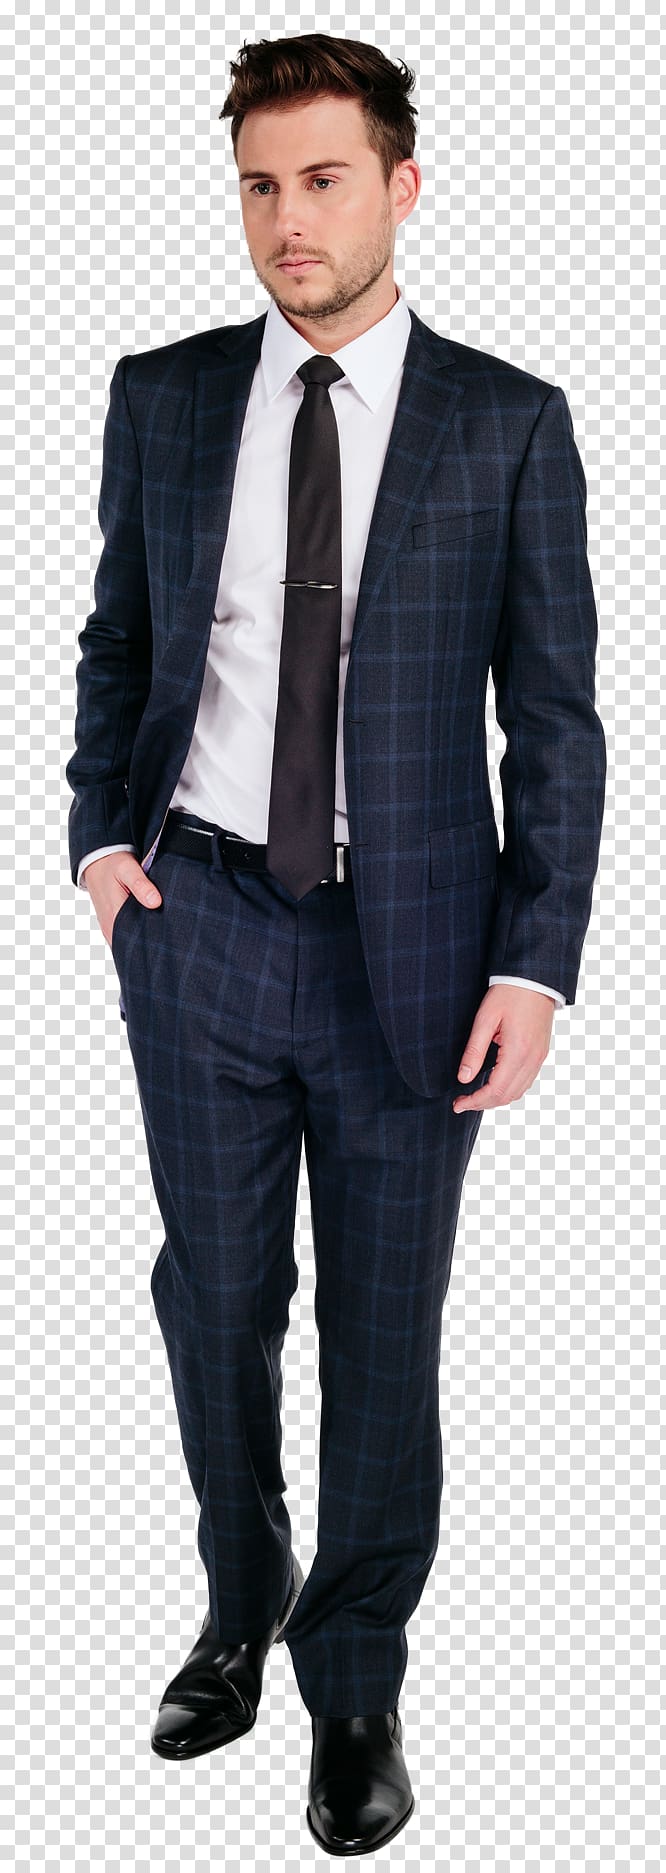 Suit Tuxedo Clothing Dress, Groom transparent background PNG clipart